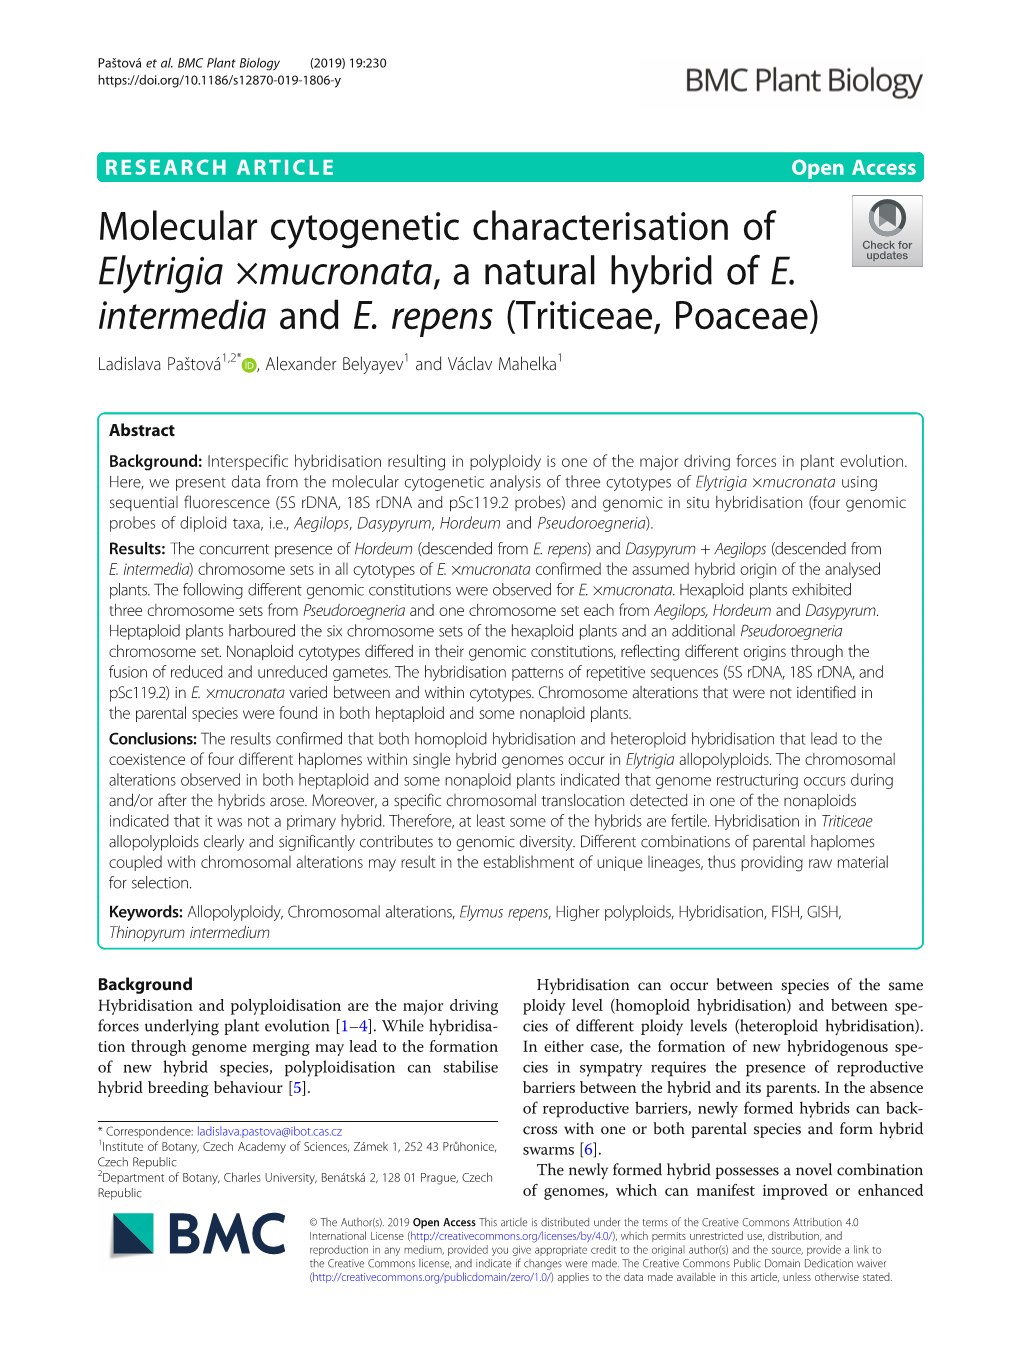 Molecular Cytogenetic Characterisation of Elytrigia ×Mucronata, a Natural Hybrid of E